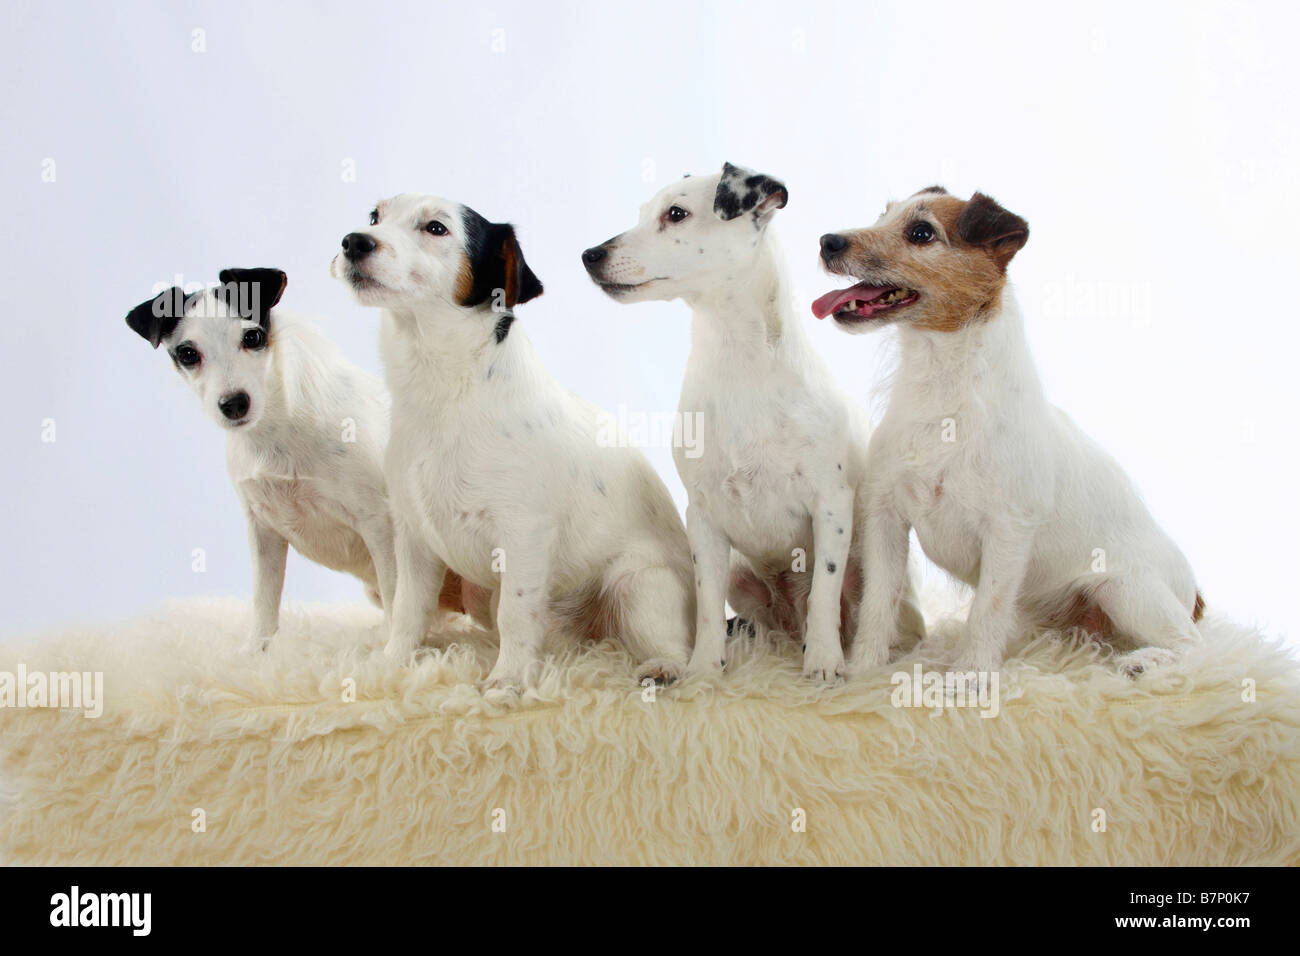 Jack Russell Terrier Stockfoto